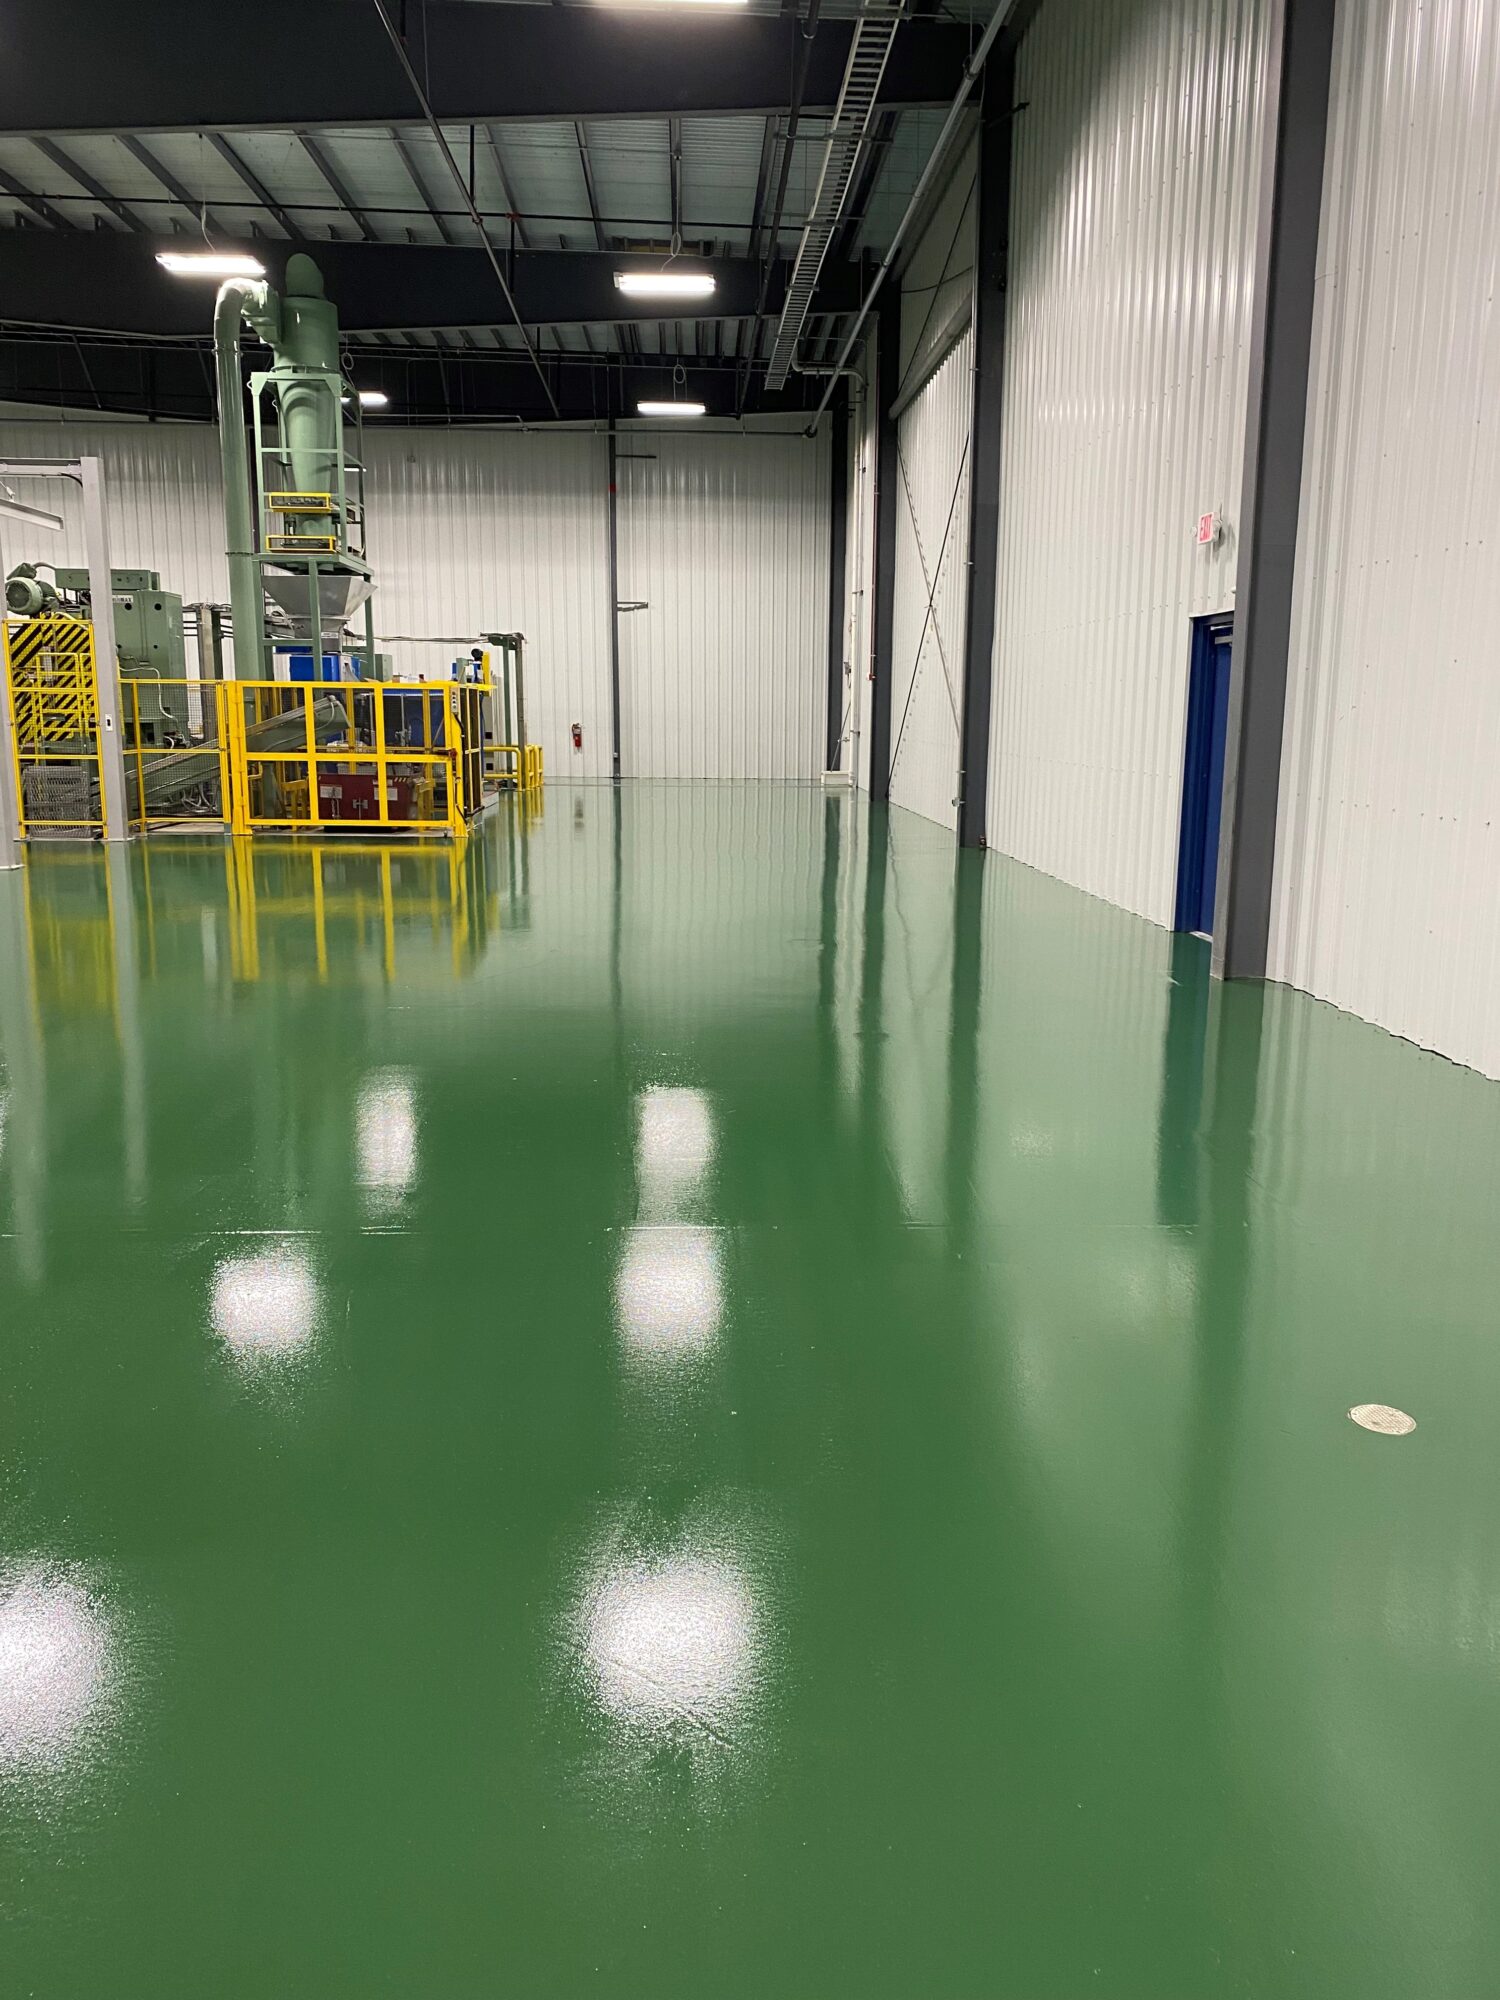 Epoxy floor coatings, concrete floor coatings, industrial concrete floors, industrial concrete flooring, TeamIA, Industrial Applications Inc. IA30yrs